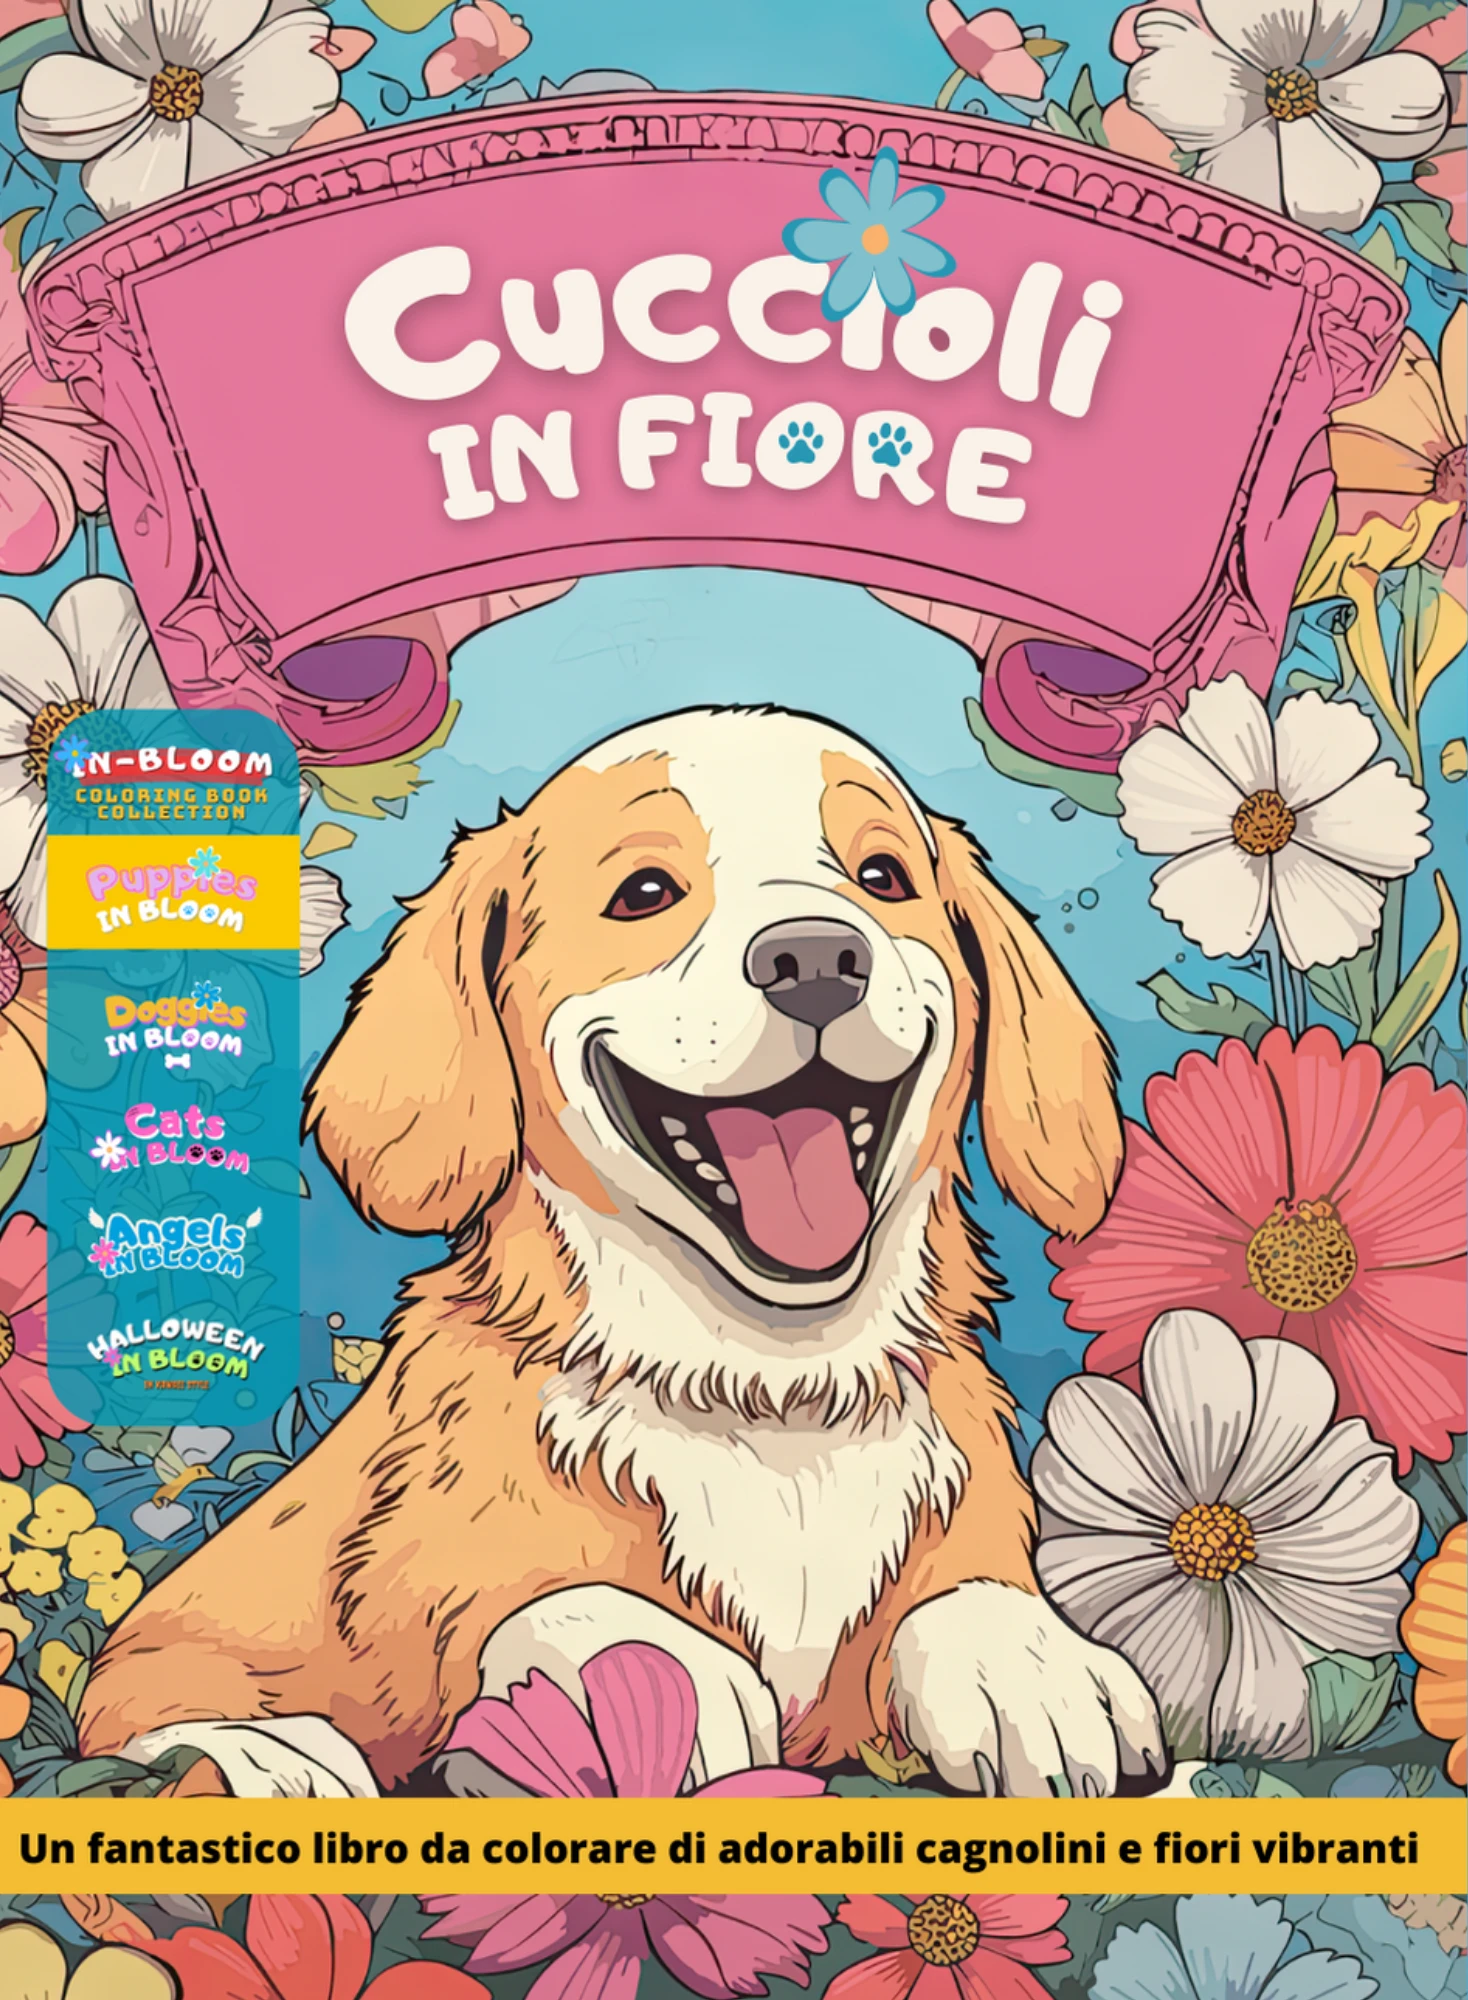 Cuccioli in Fiore, coloring book version